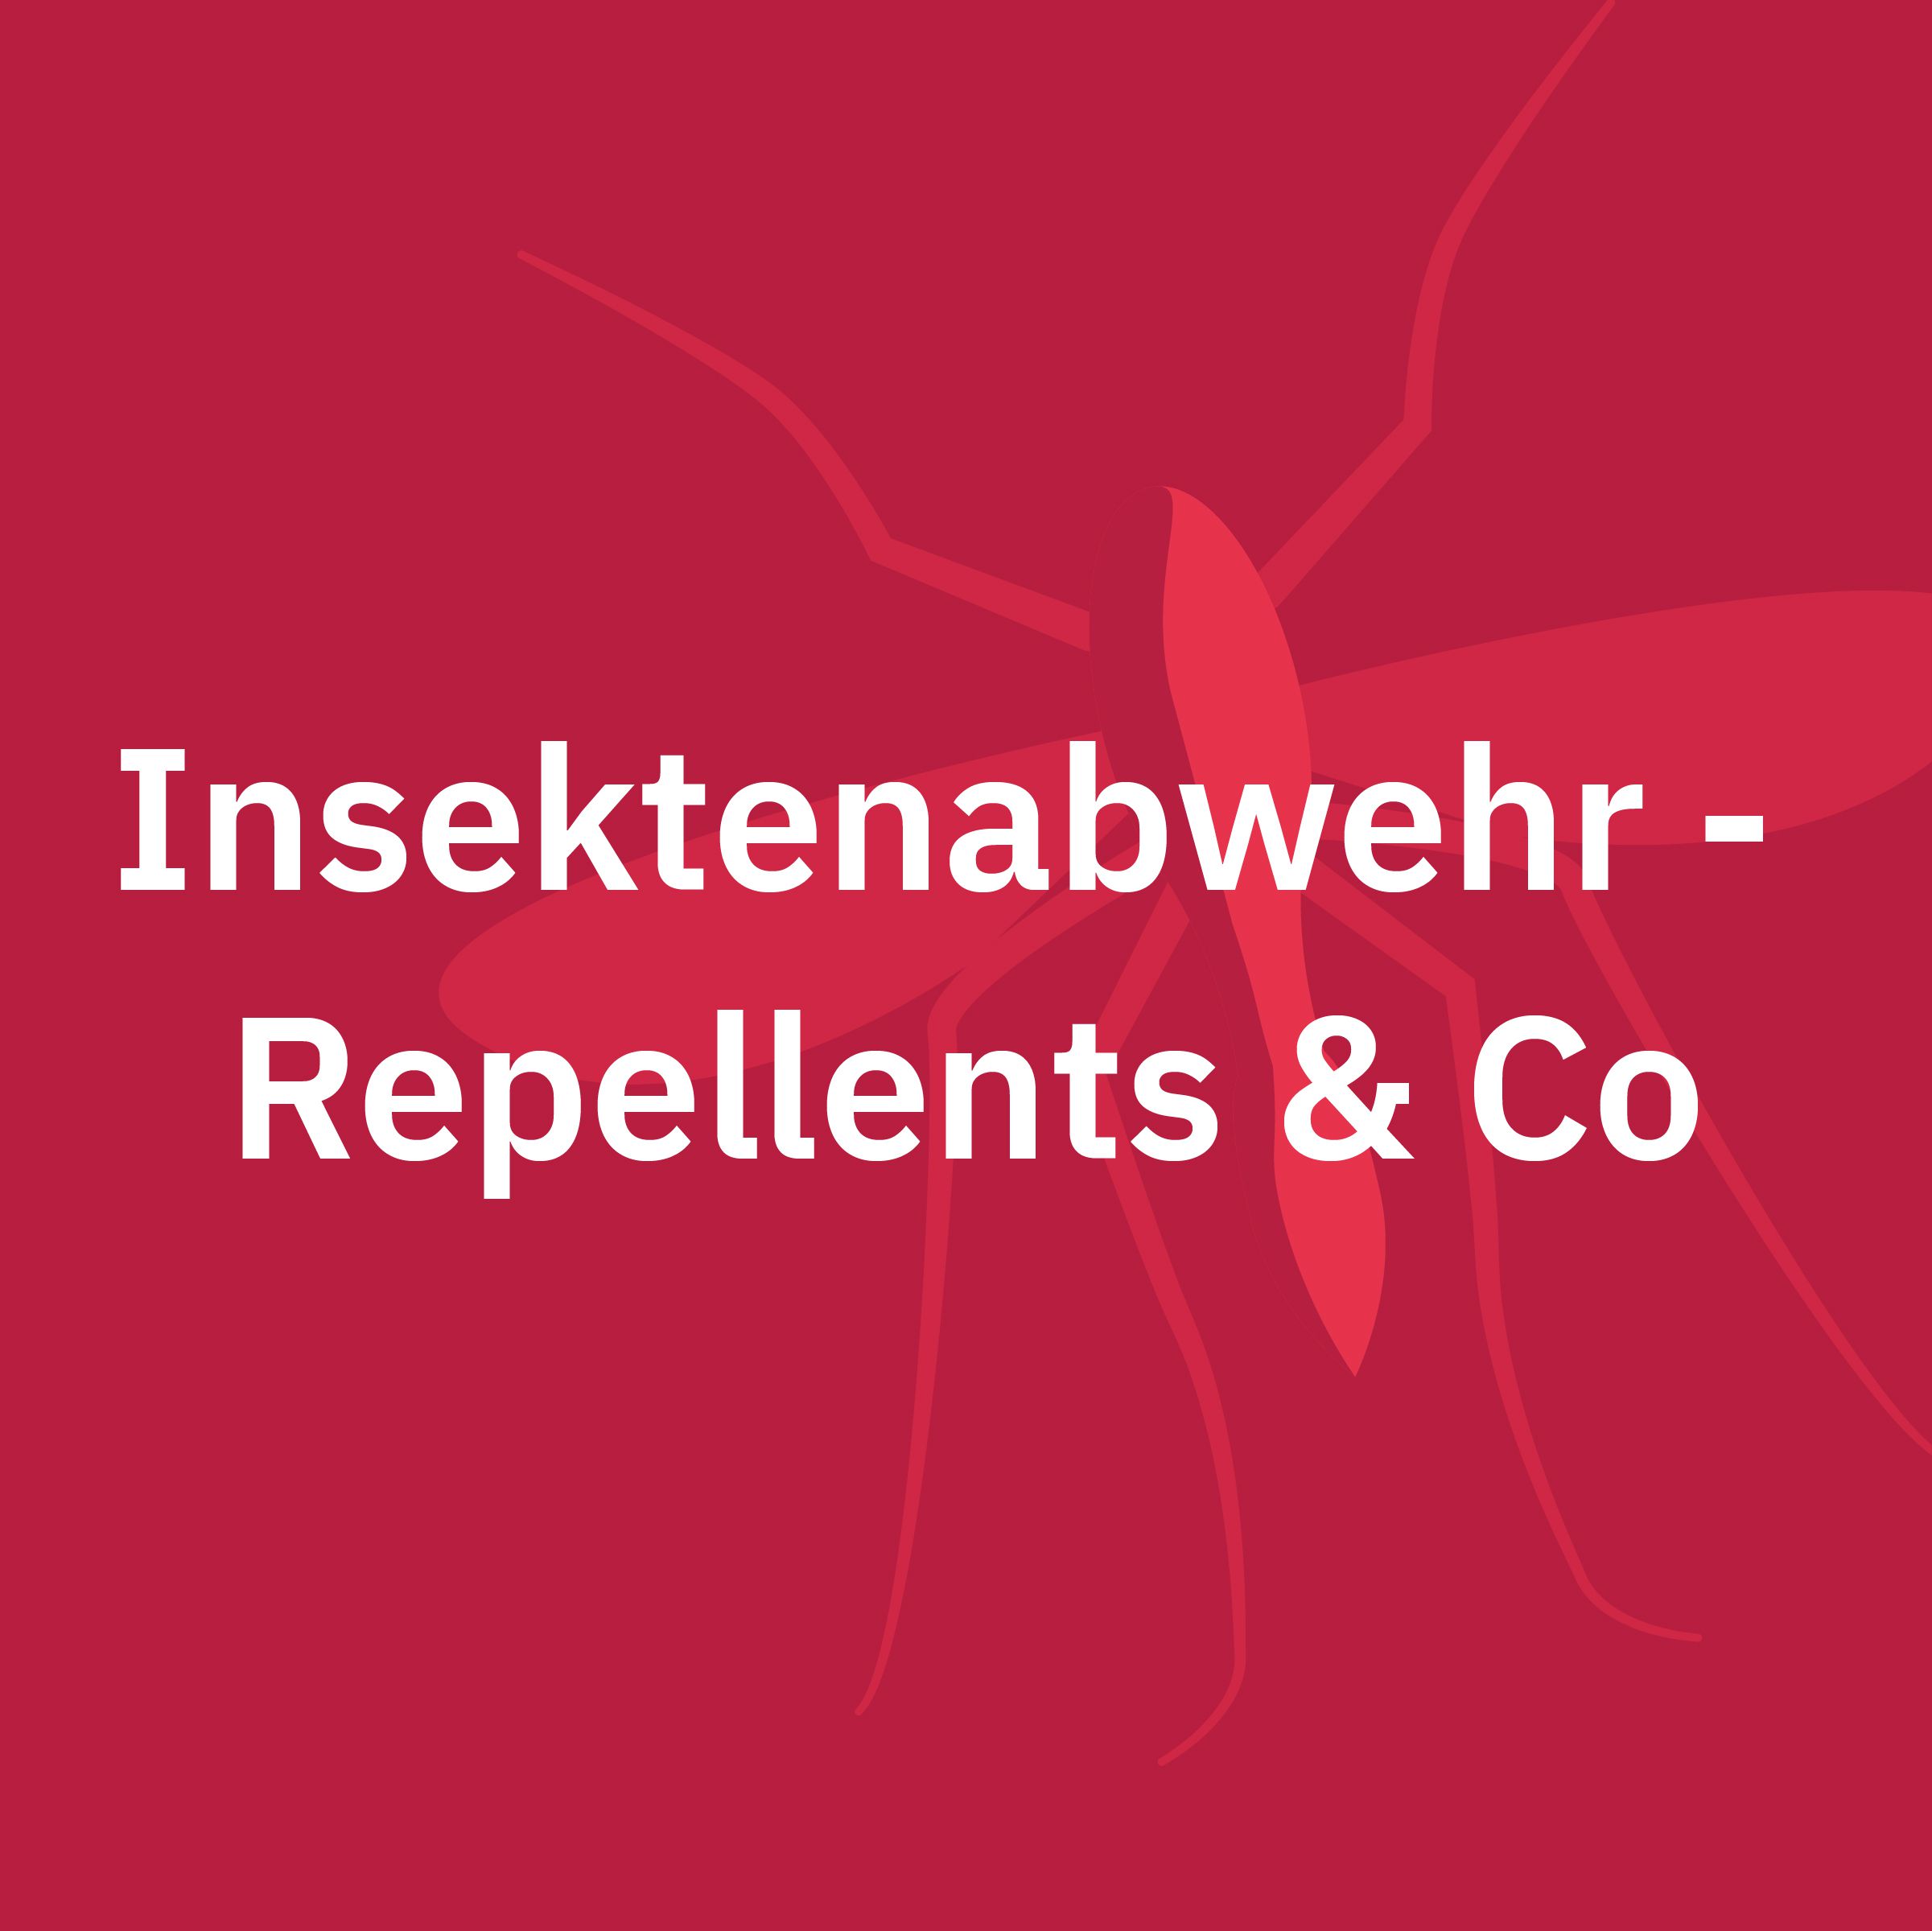 Insektenabwehr - Repellents & Co